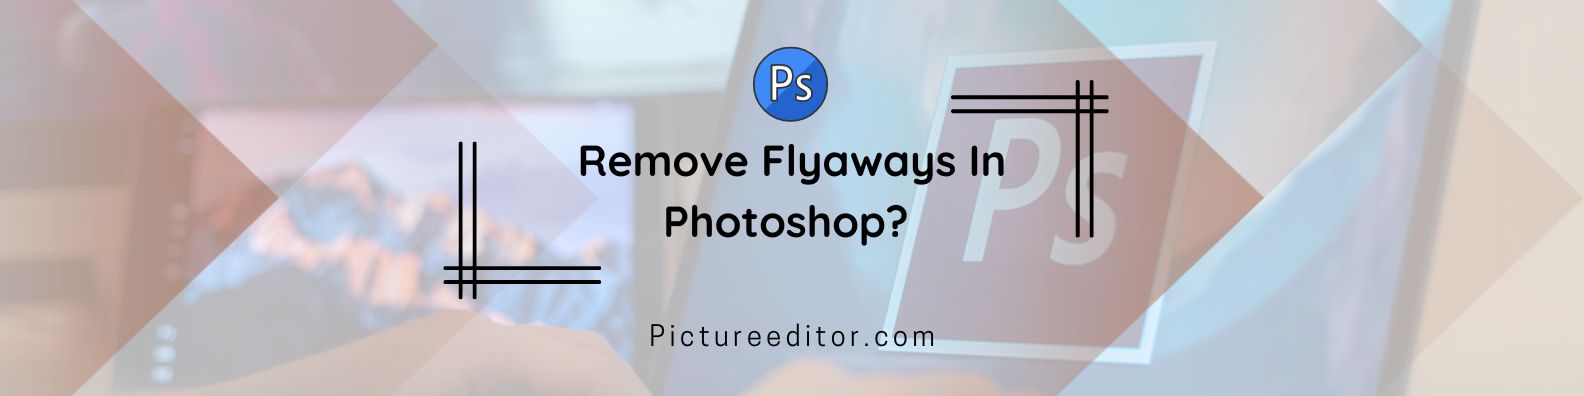 Remove Flyaways In Photoshop